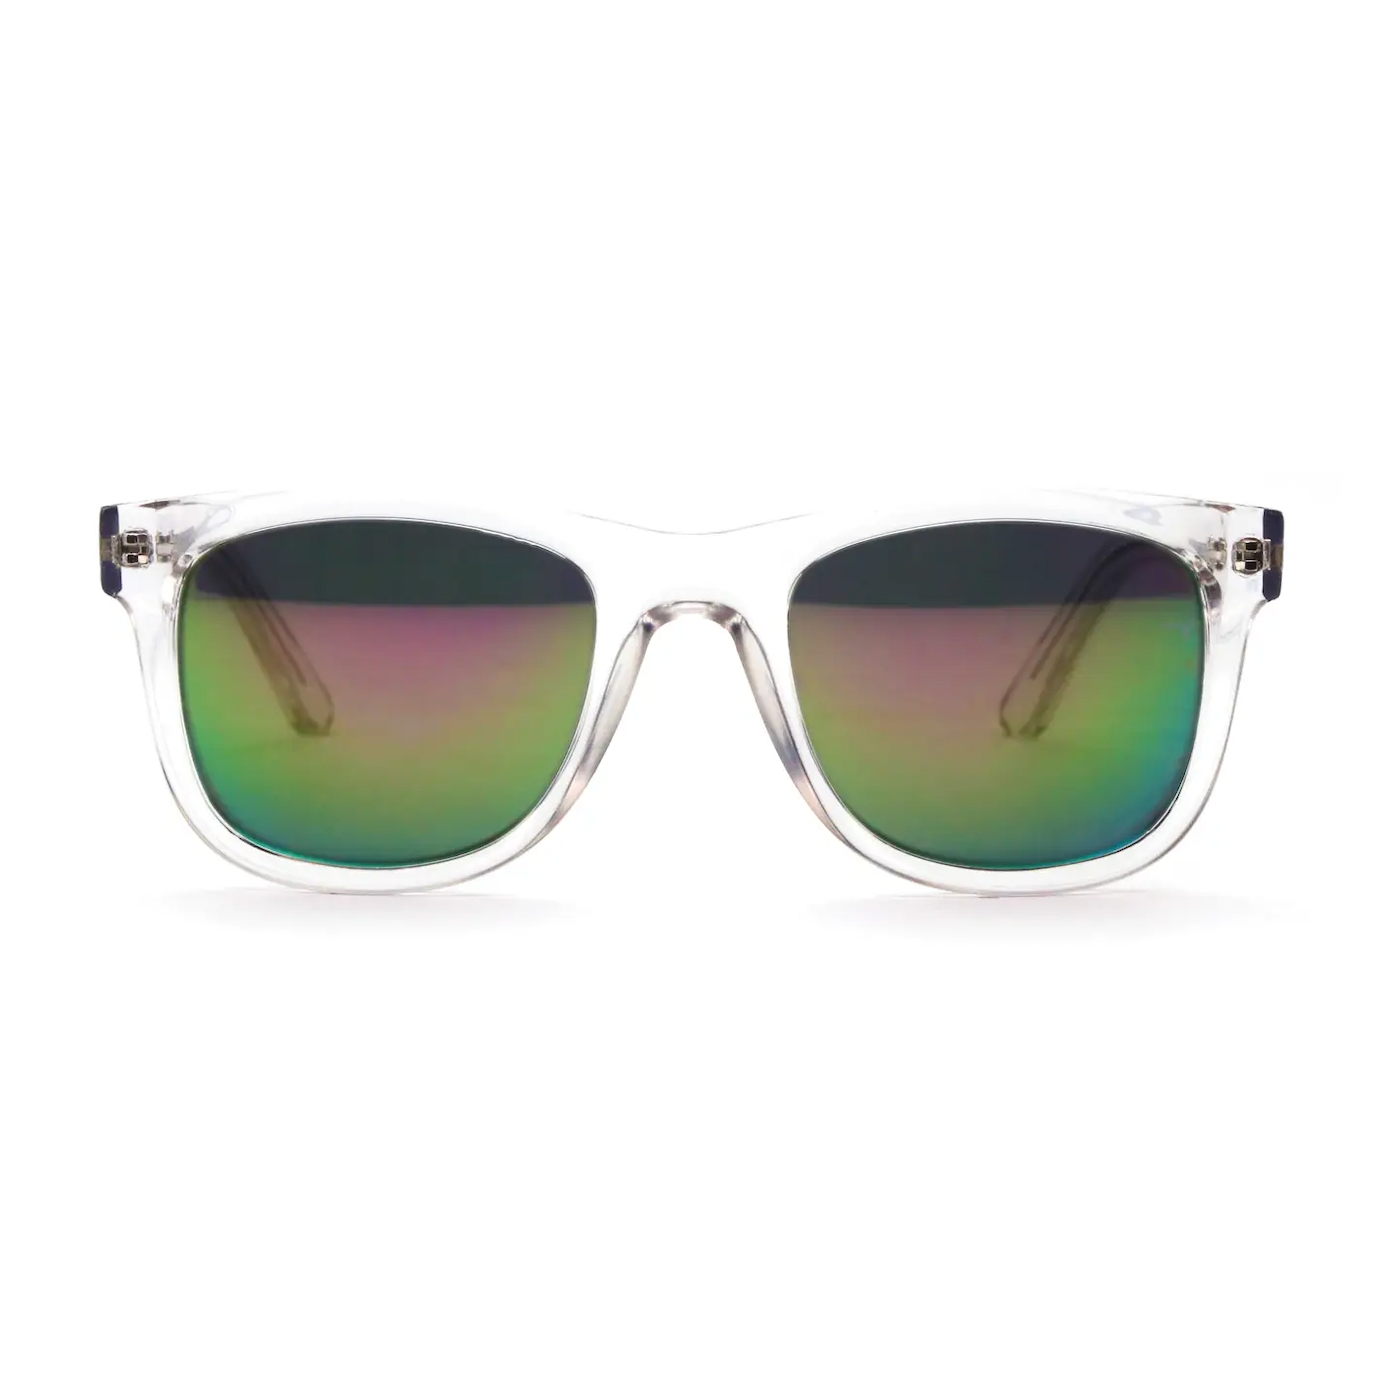 Optimum Optical Sunglasses- Malibu